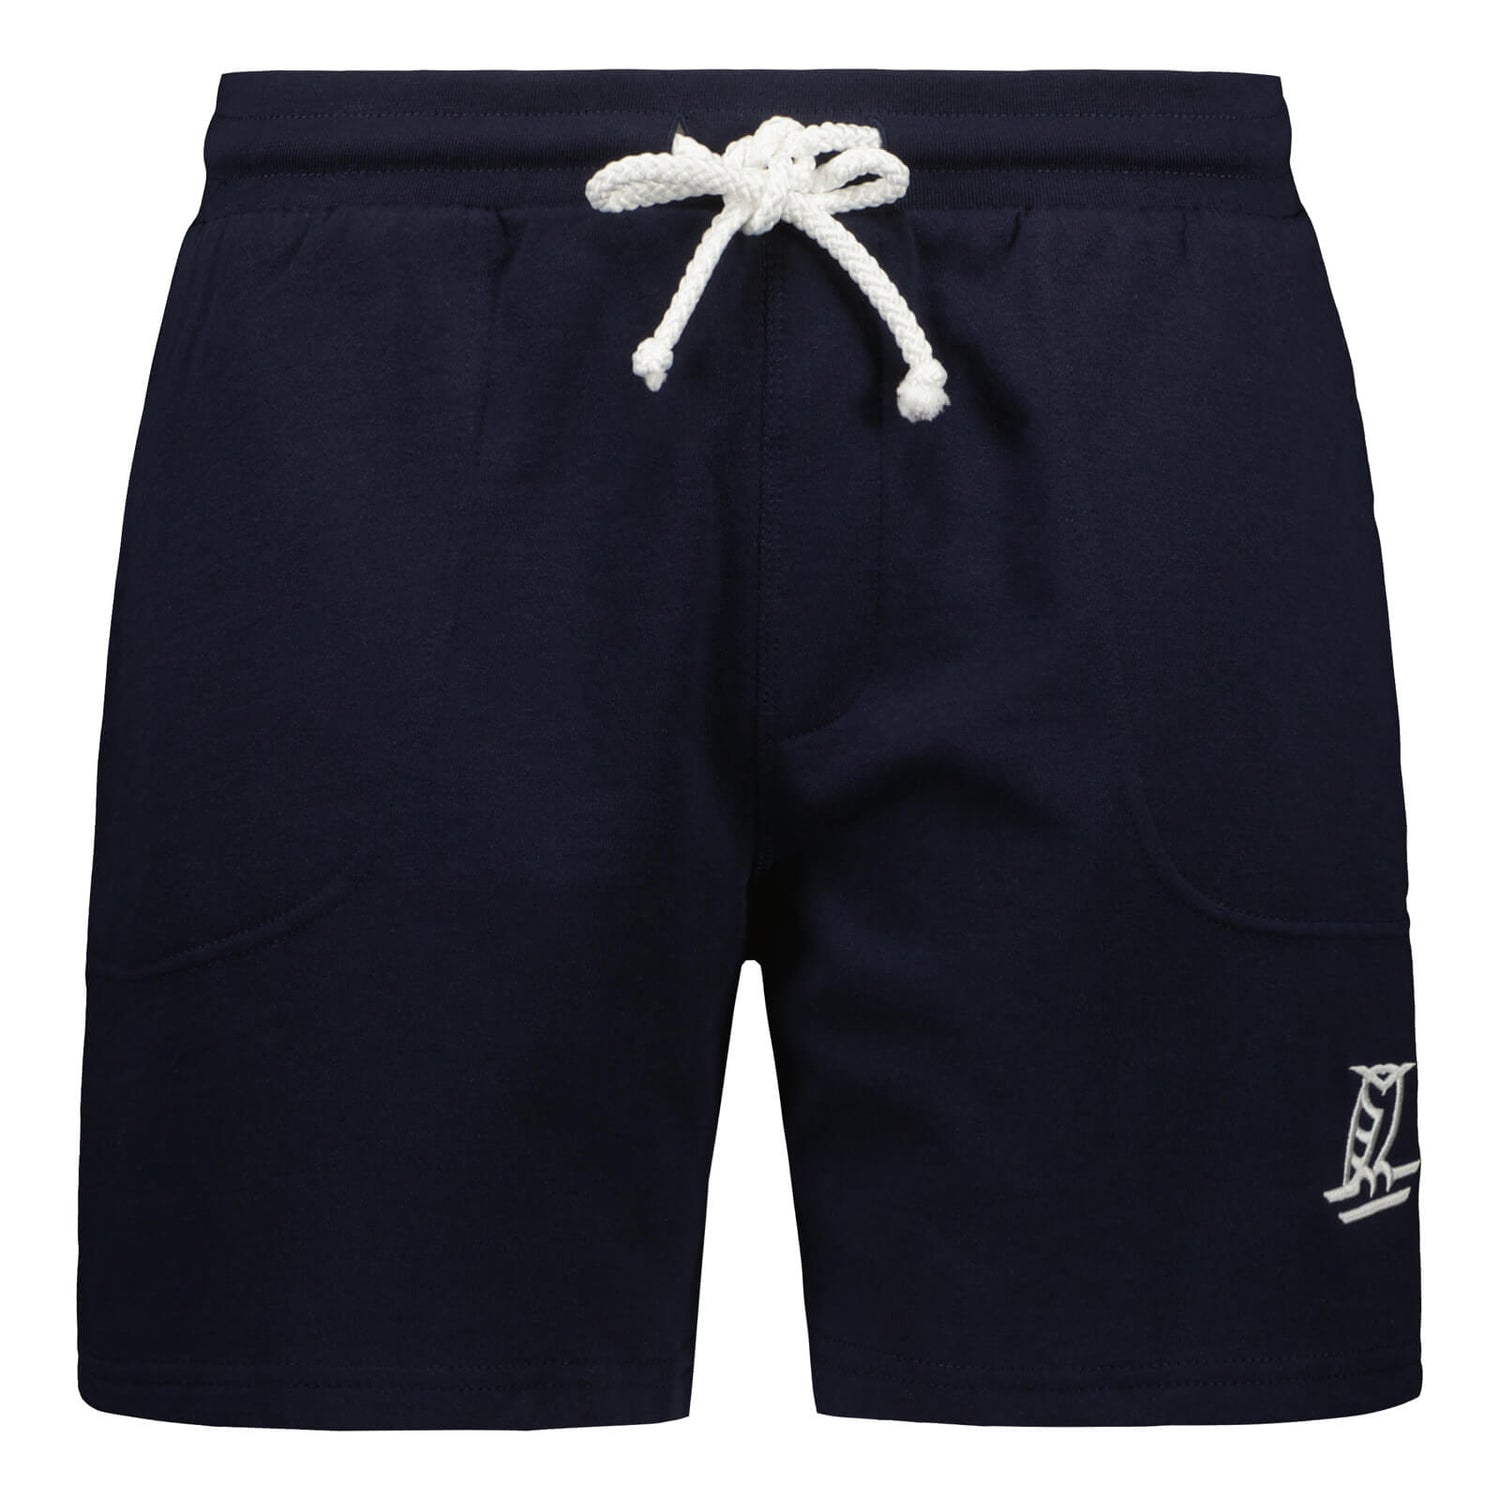 Bubi Miami Shorts, Navy Blue